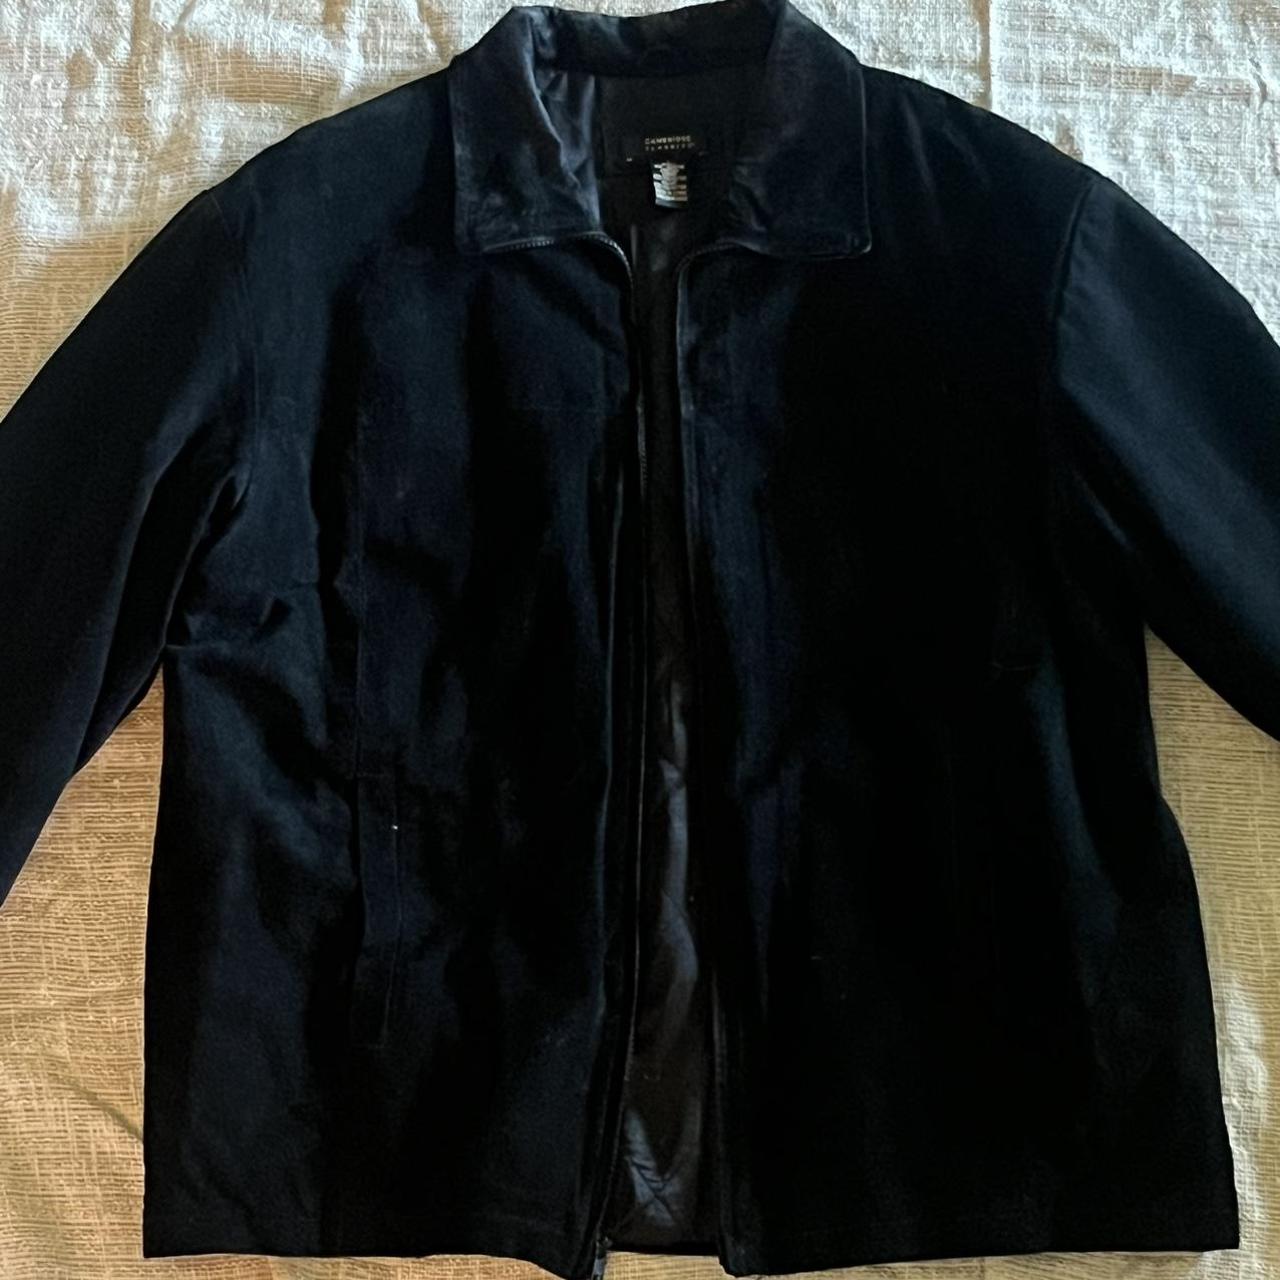 Like new mens leather jacket, size Large 100%... - Depop